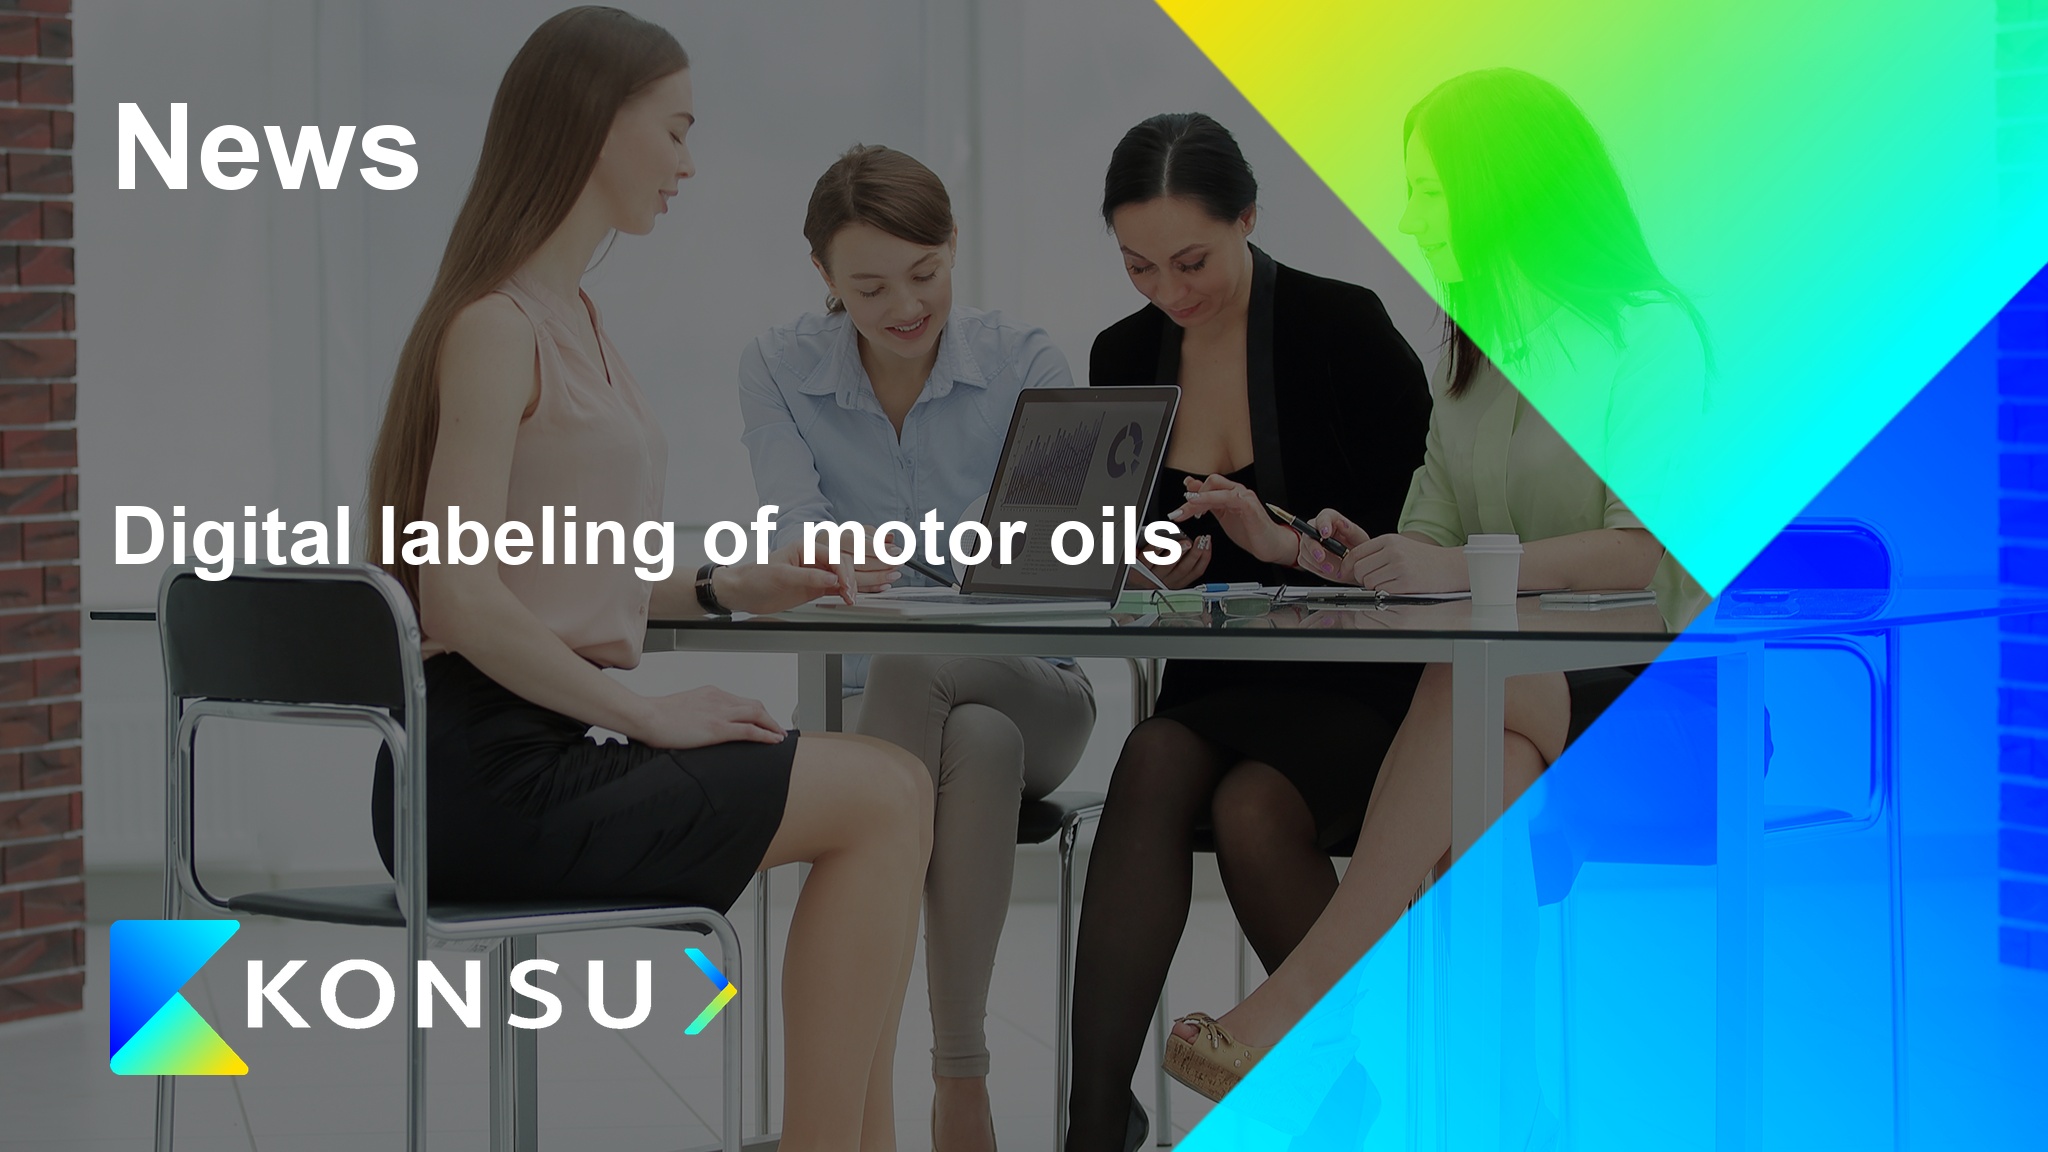 Digital labeling motor oils en konsu outsourcing consulting ru k